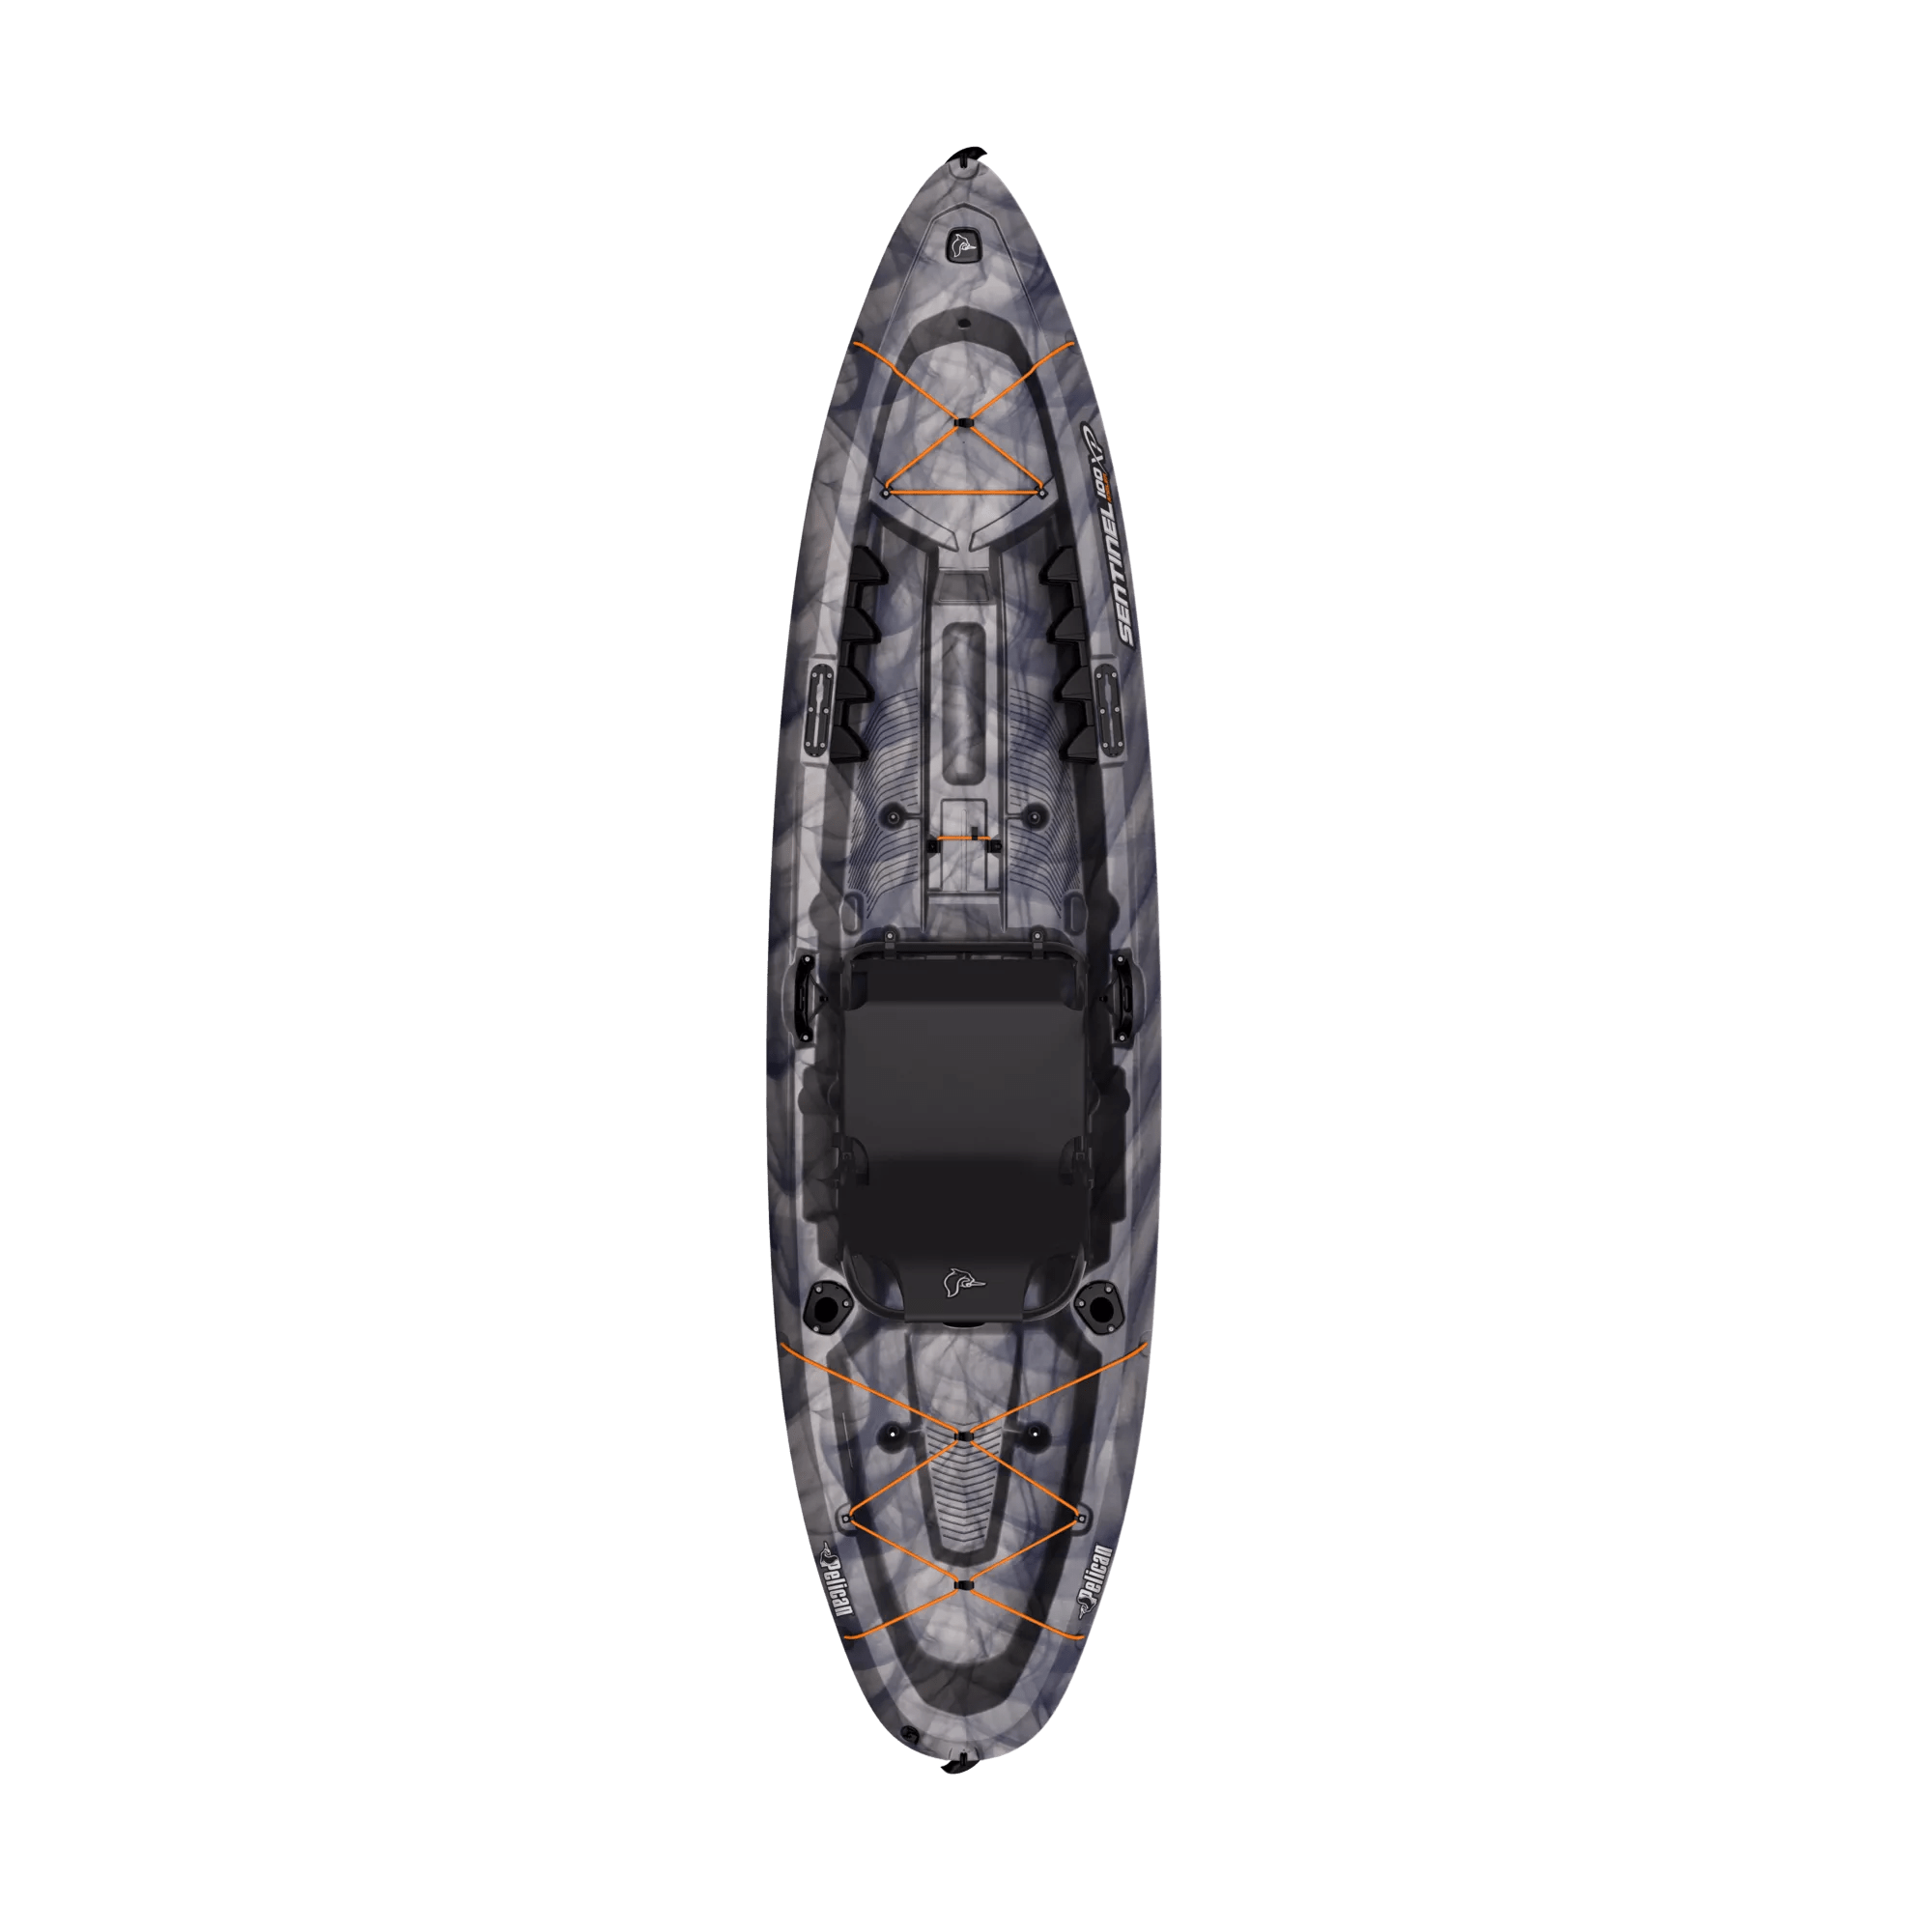 PELICAN - Sentinel 100X Angler Fishing Kayak - Black - MBF10P104-00 - TOP